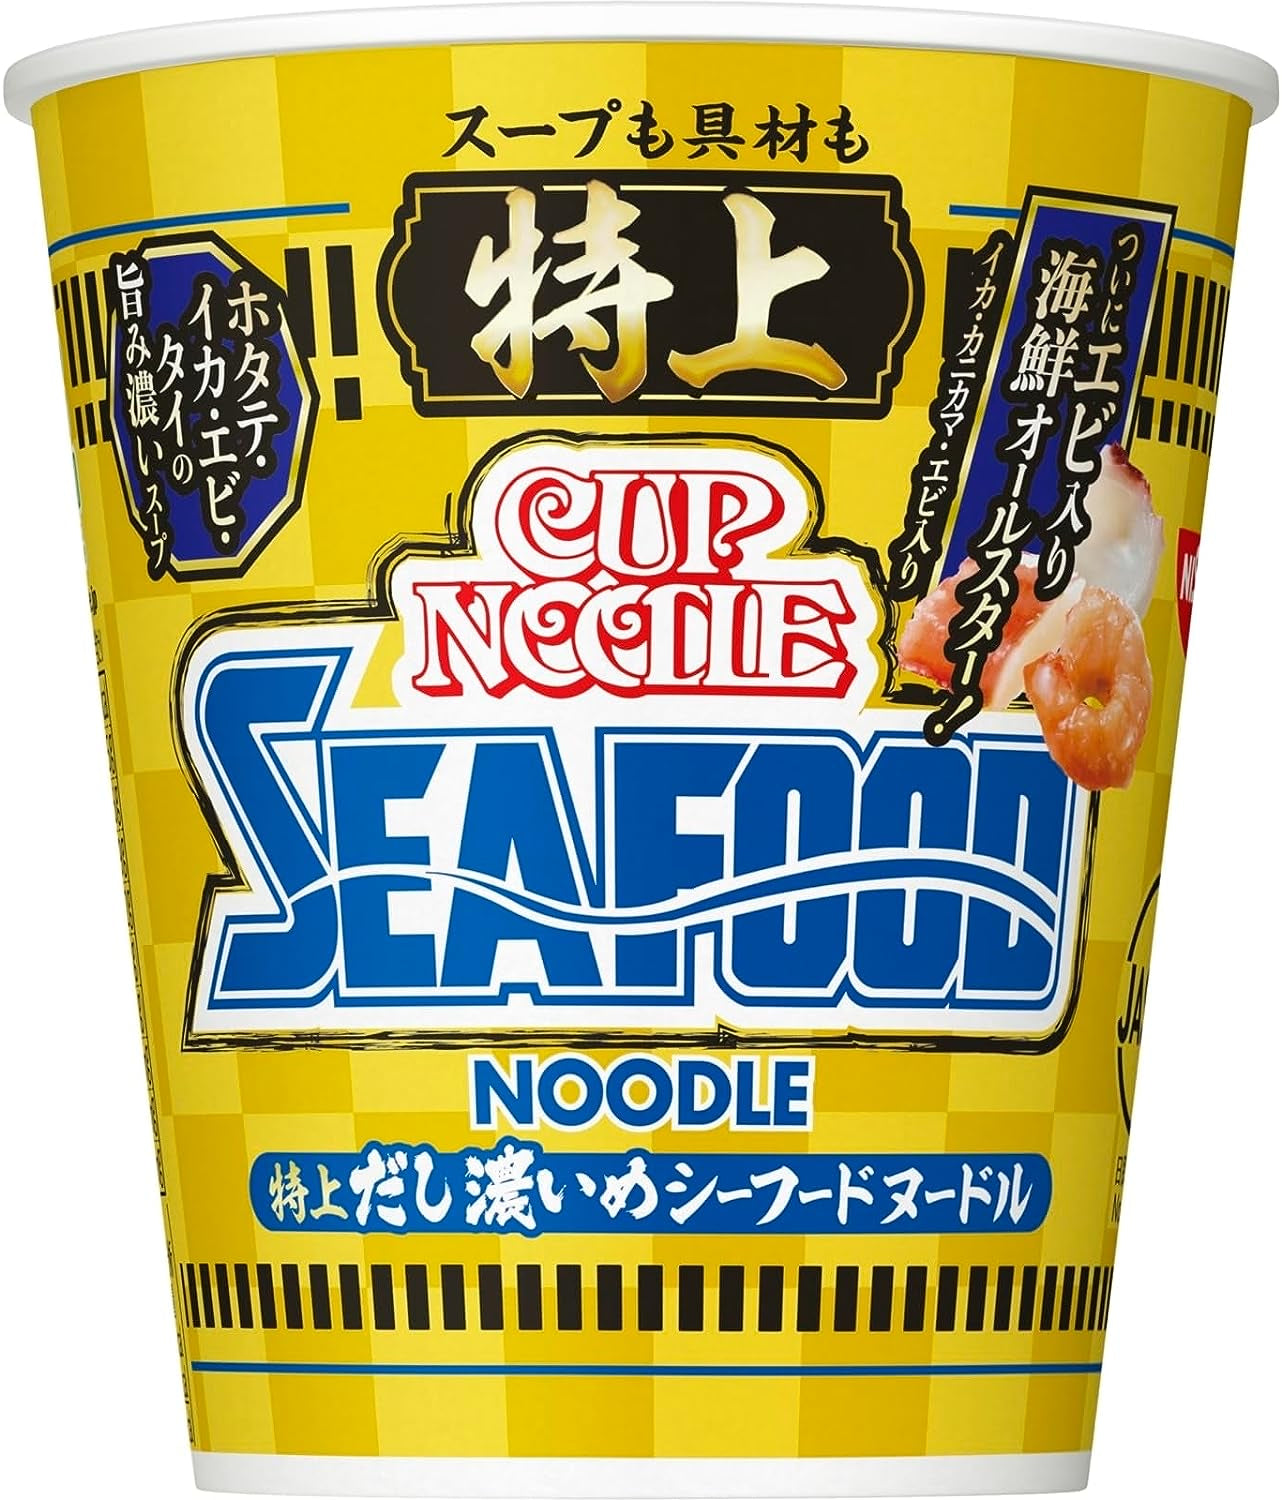 NISSIN CUP NOODLE Ramen Premium Seafood Salt Instant Soup Food Japanese 77g